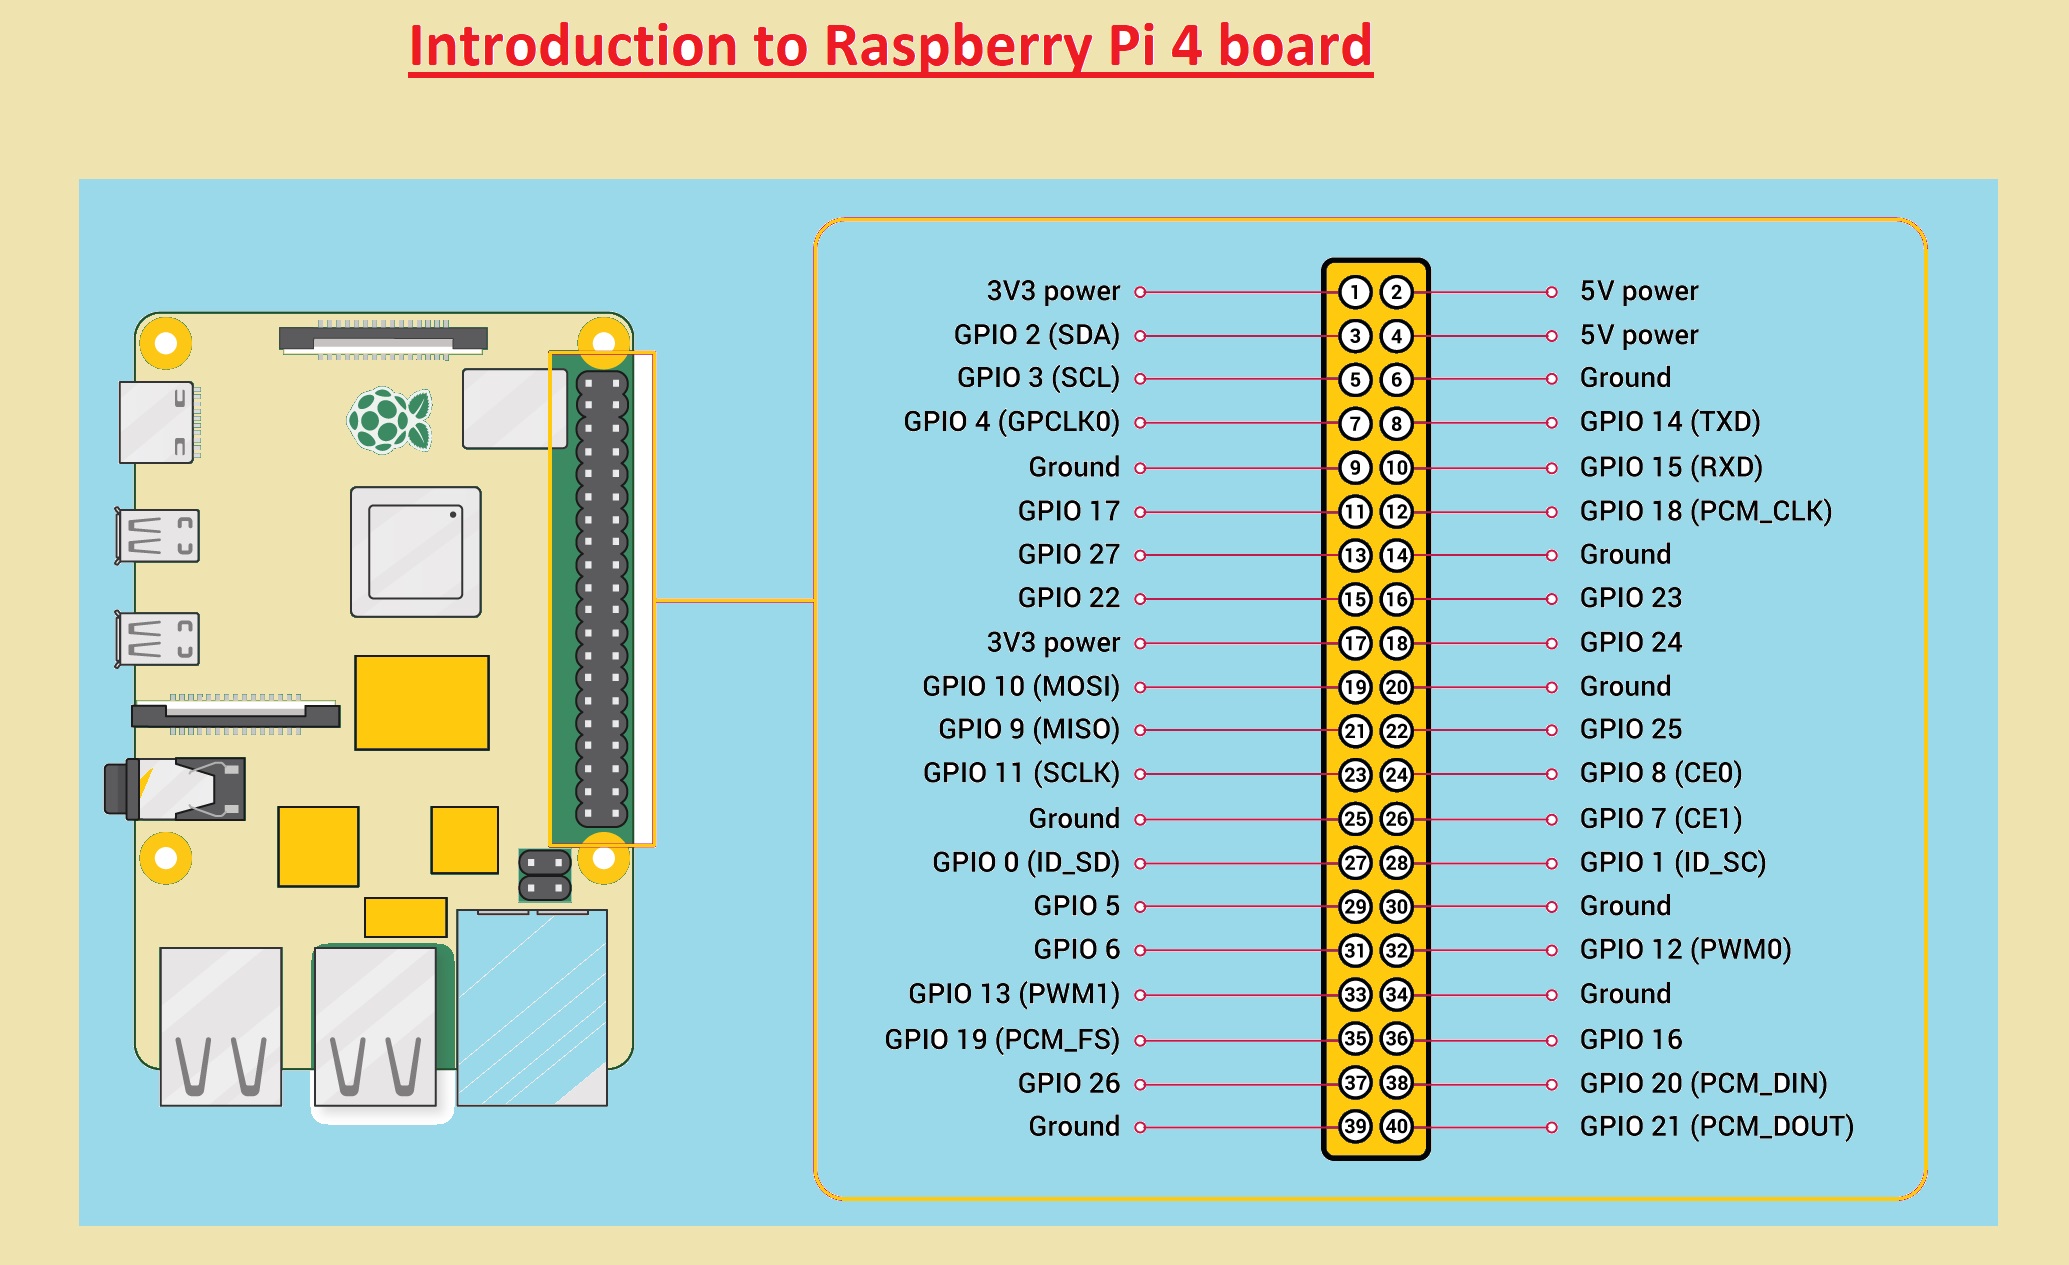 Raspberry Pi 4 Pinout